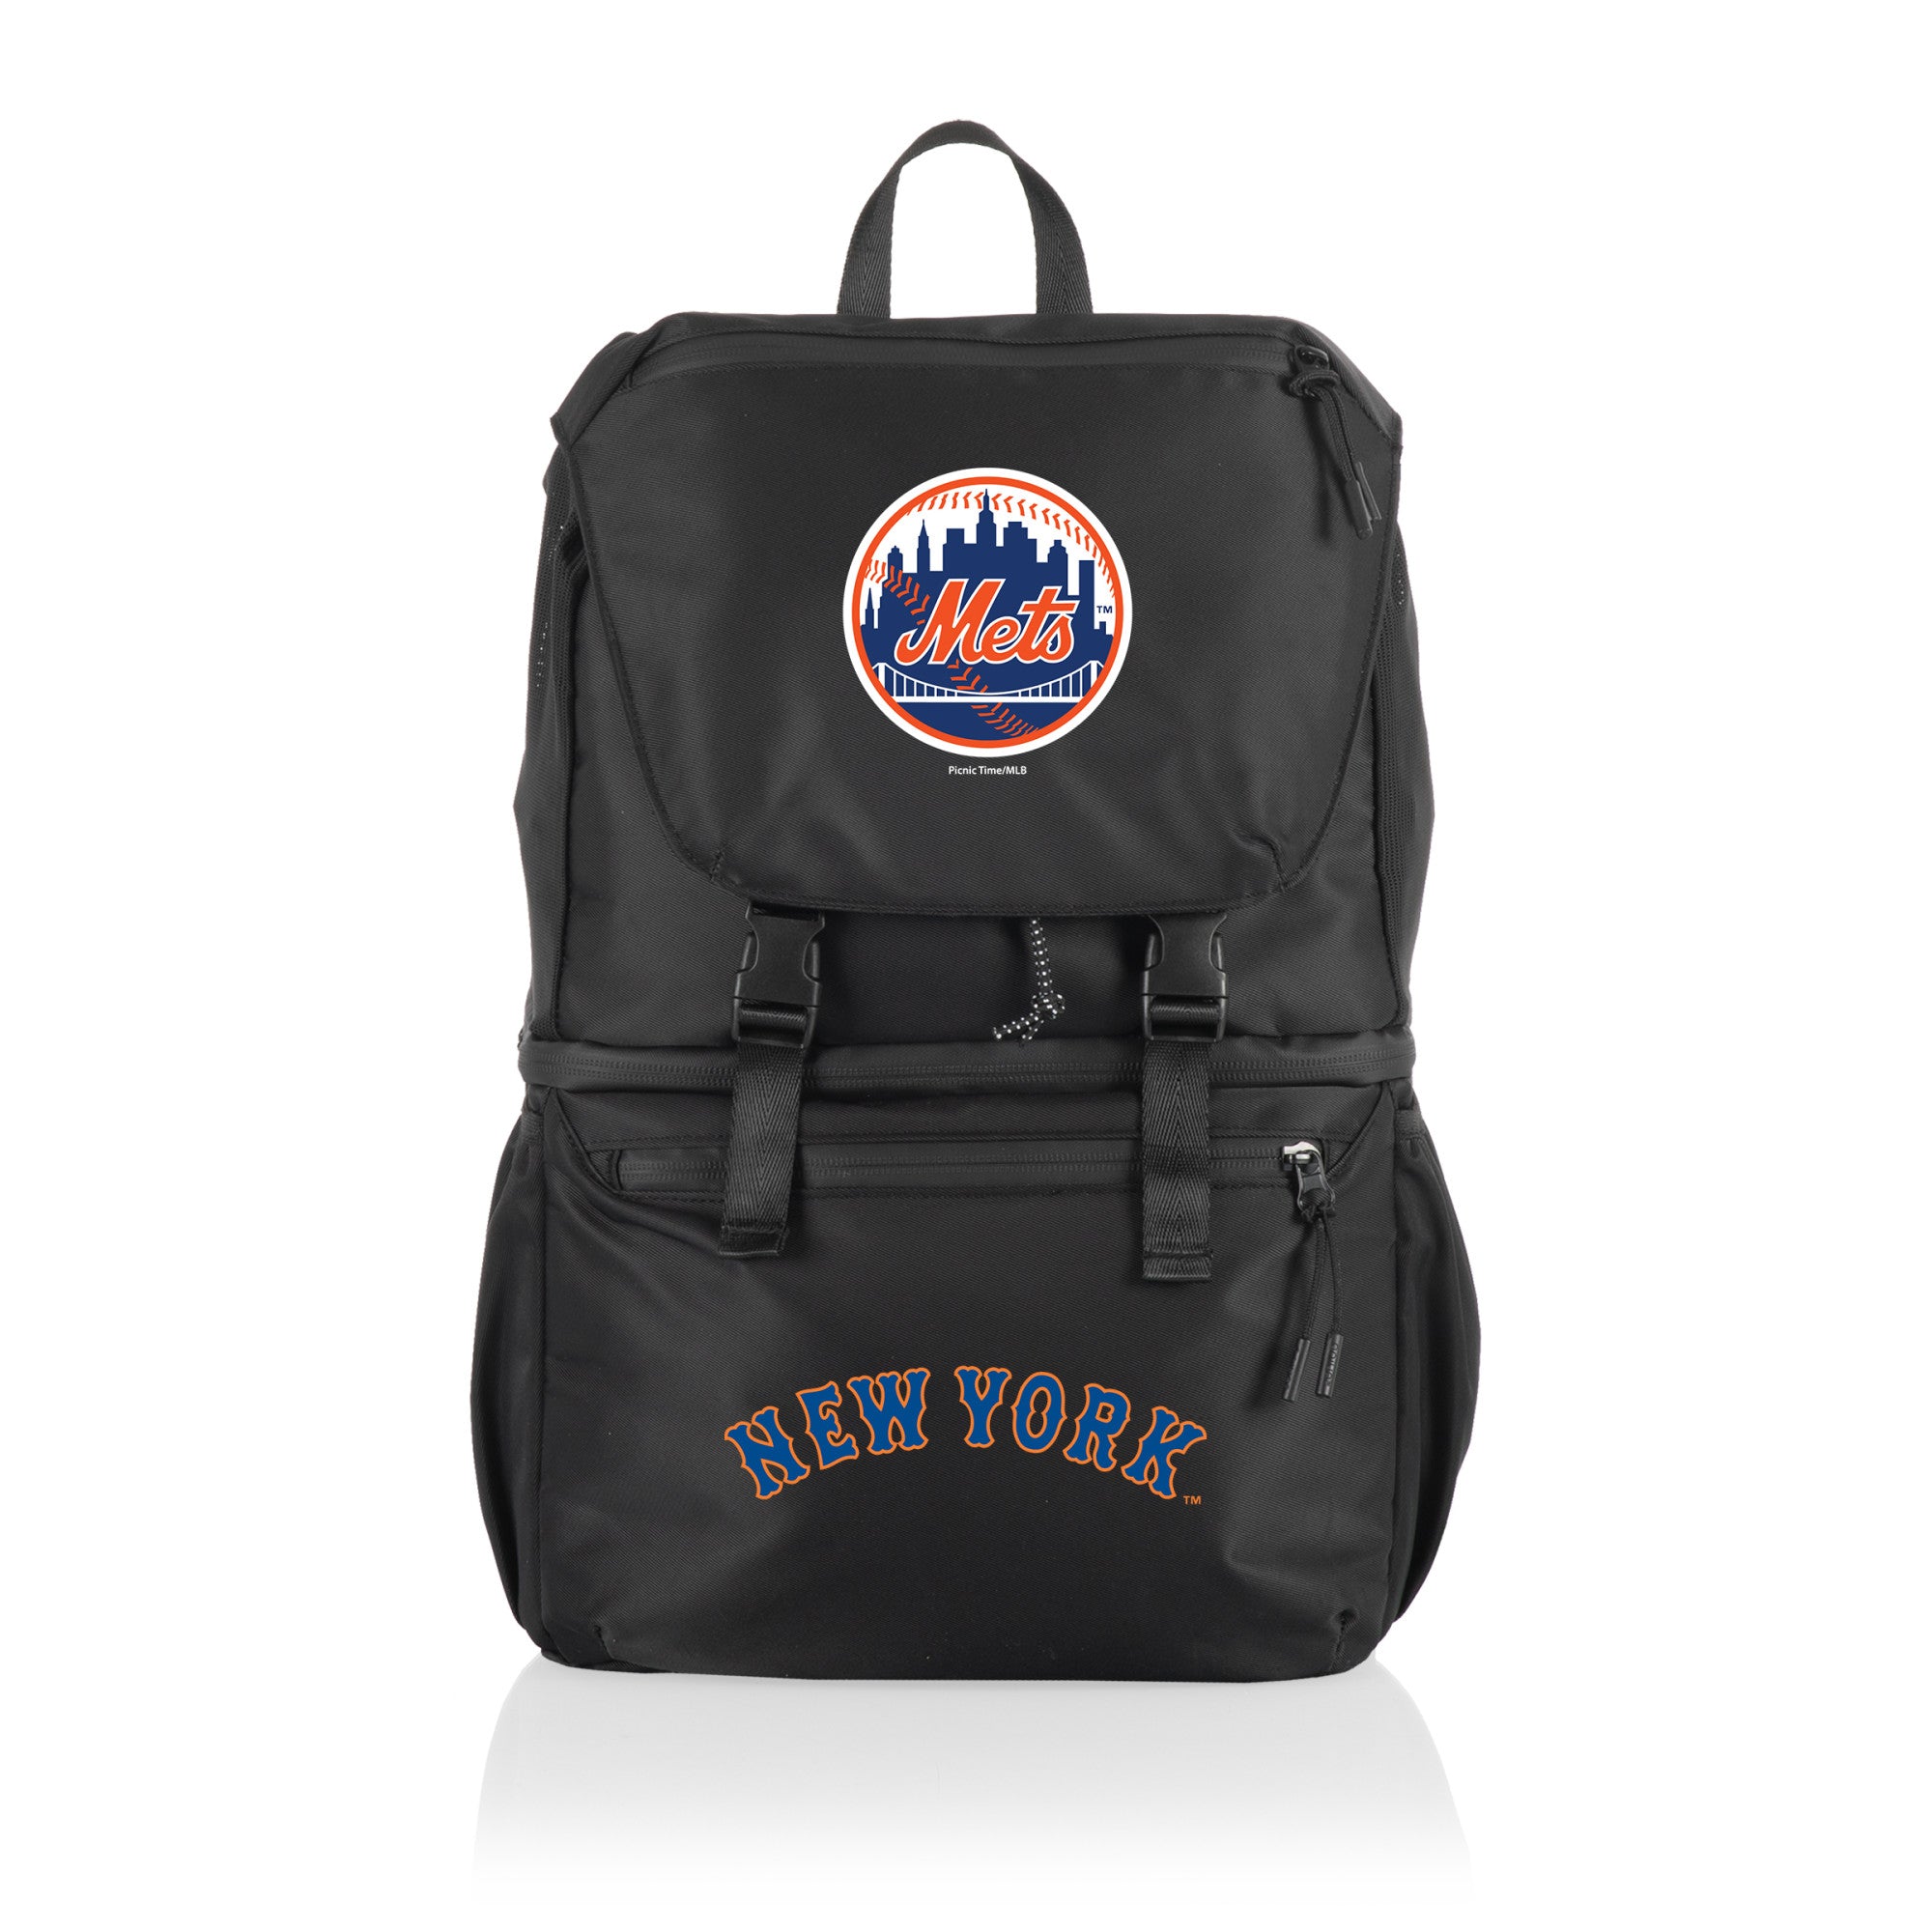 New York Mets - Tarana Backpack Cooler